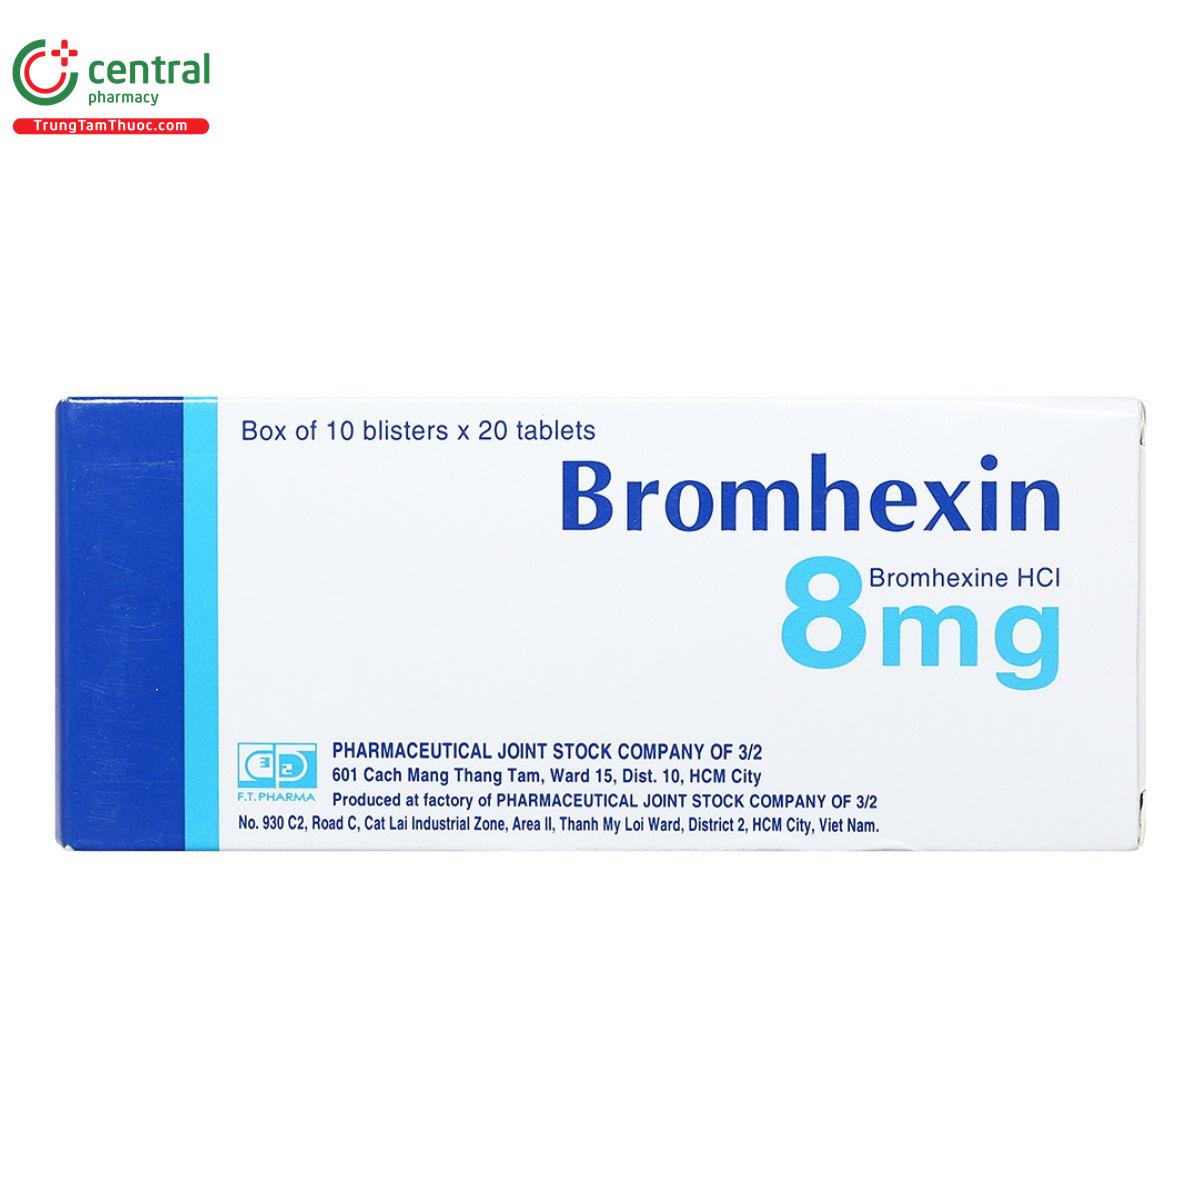 thuoc bromhexin 8mg ft pharma 5 R6217